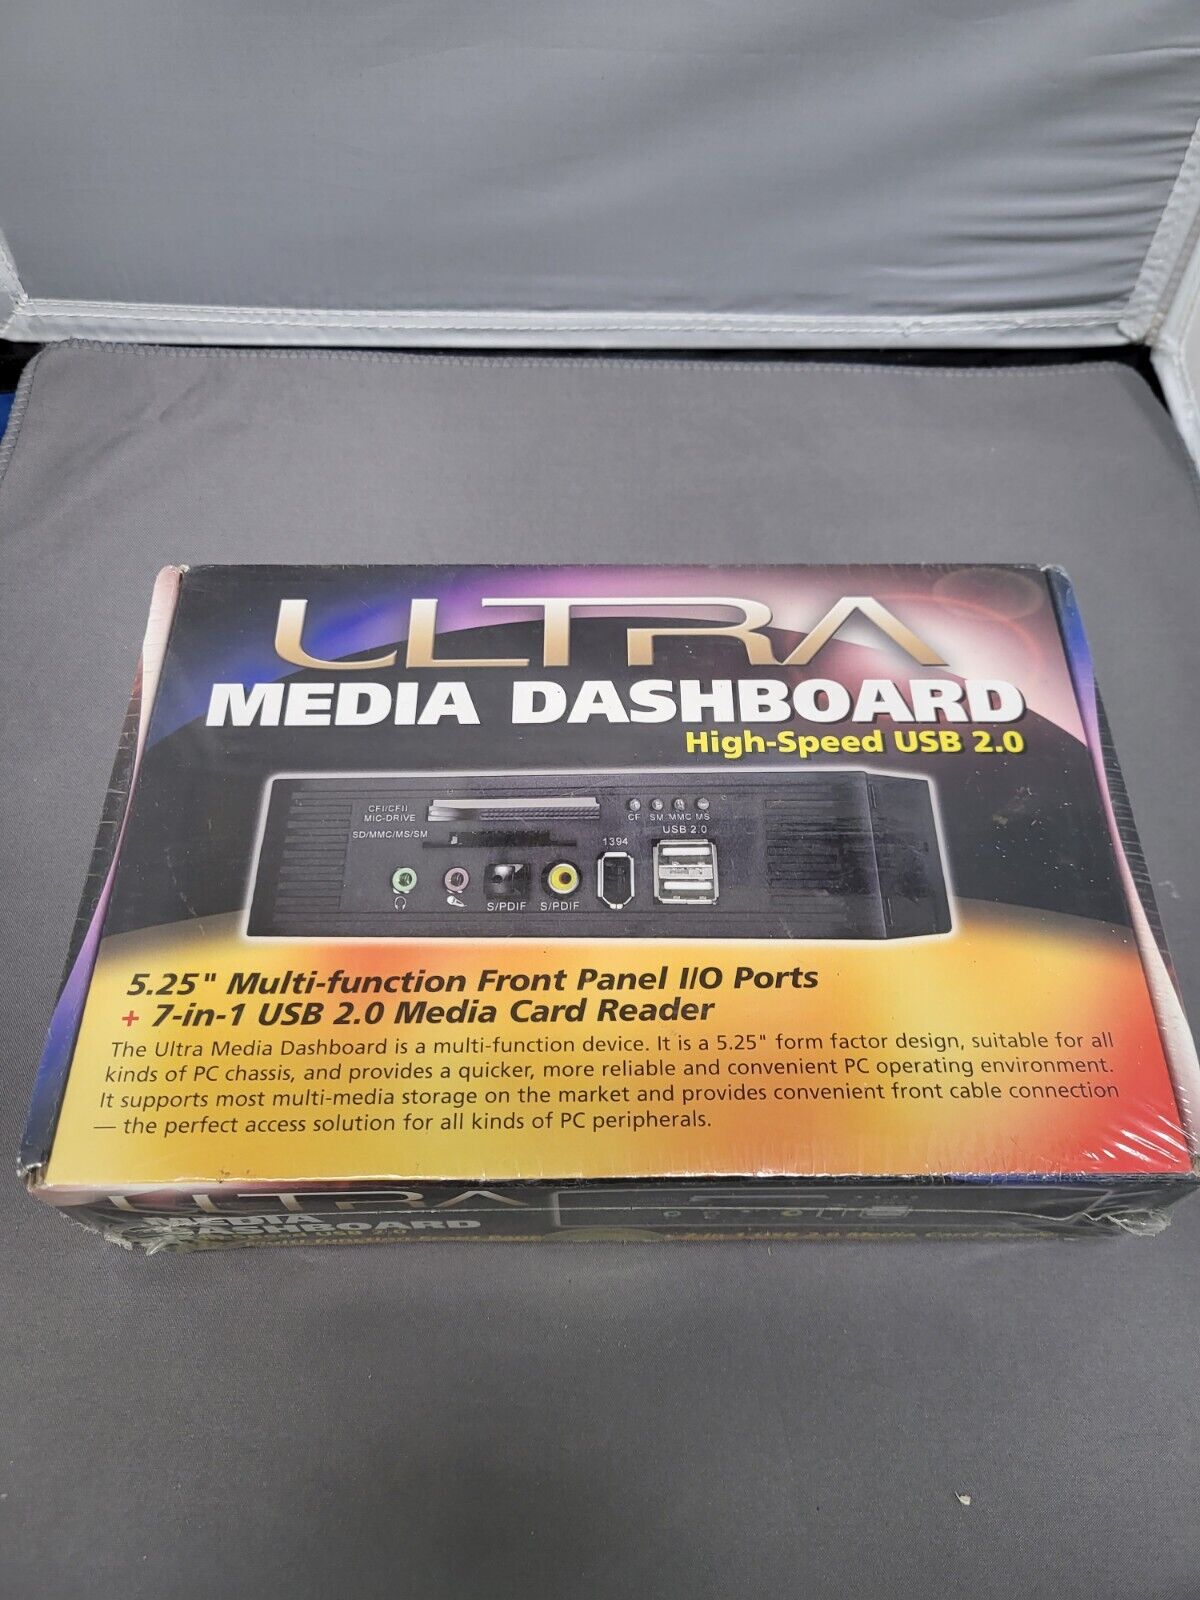 Ultra Media Dashboard High Speed USB 2.0 ULT-30155